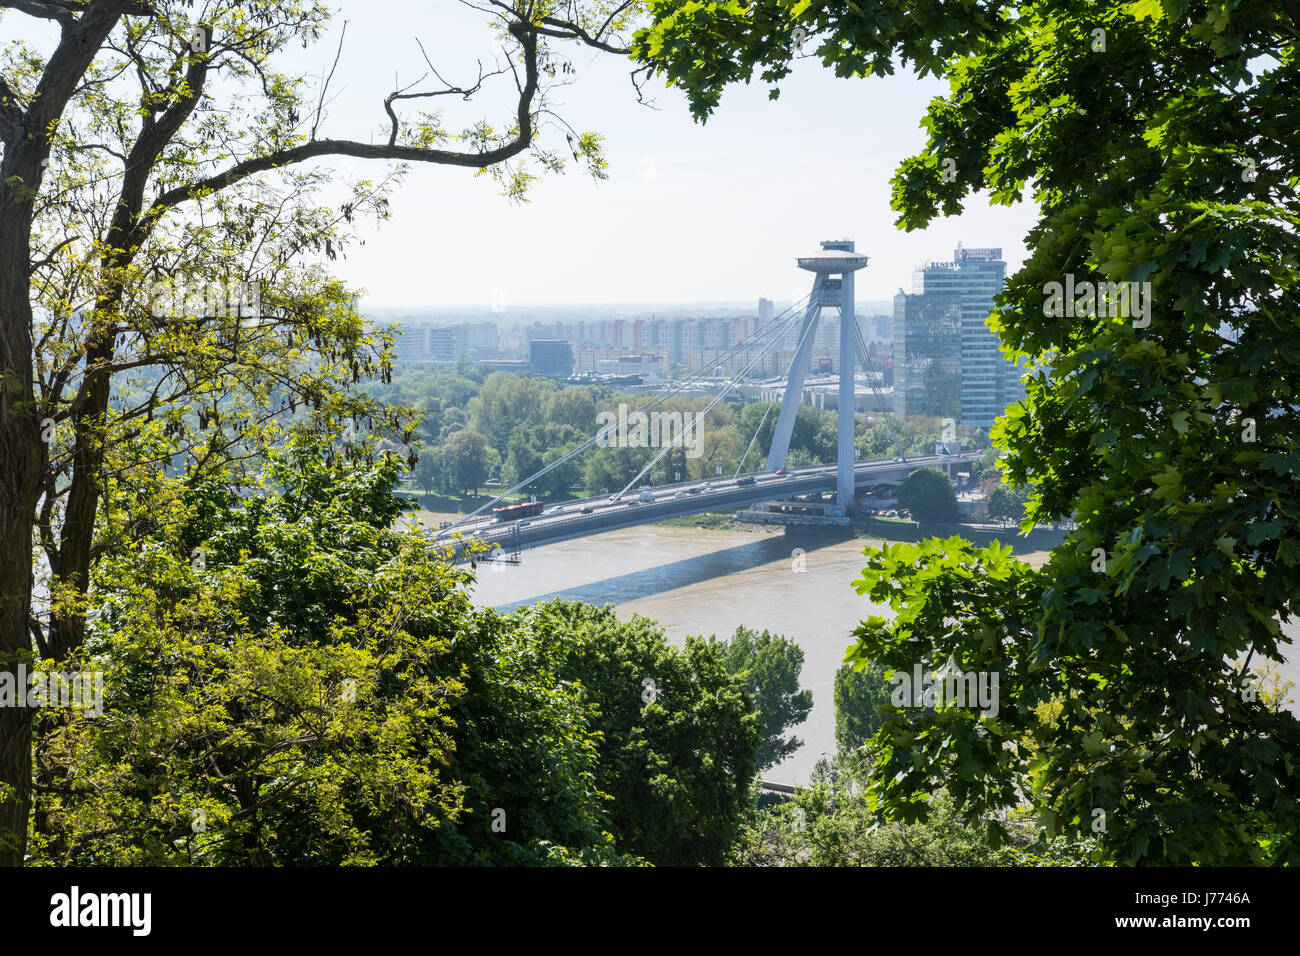 The UFO tower on the Danube bridge in Bratislava Stock Photo